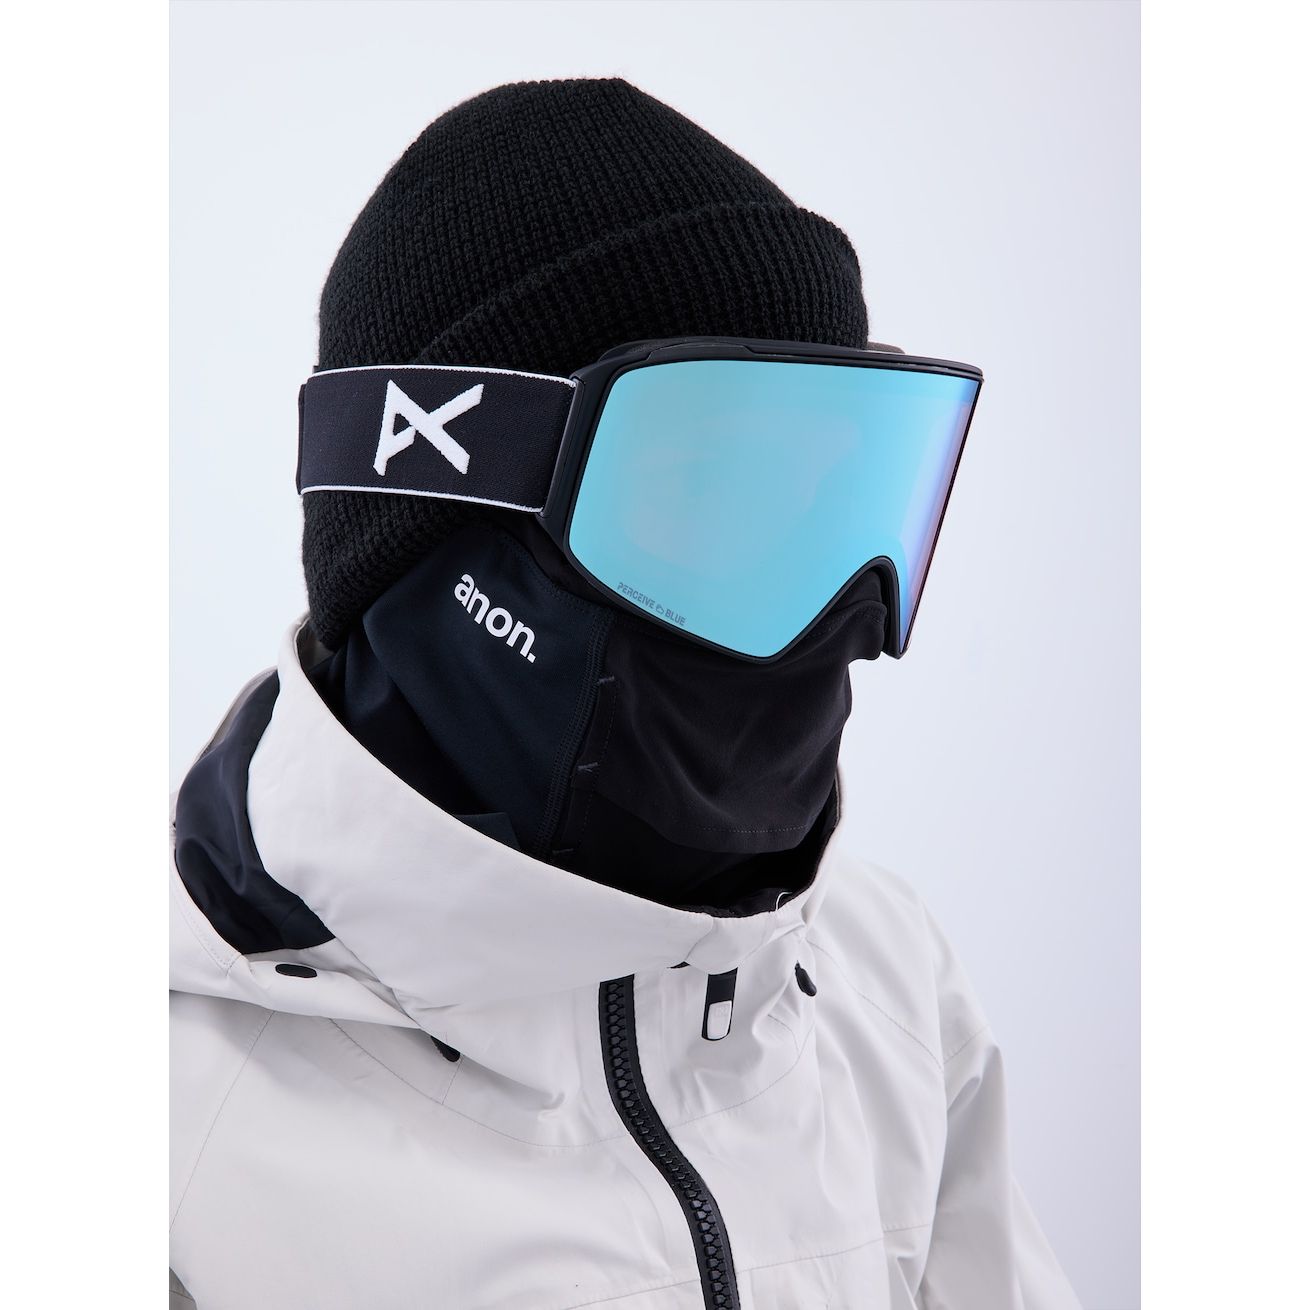 Anon M4 Cylindrical Goggles + Bonus Lens + MFI Face Mask Black / Perceive Variable Blue Snow Goggles